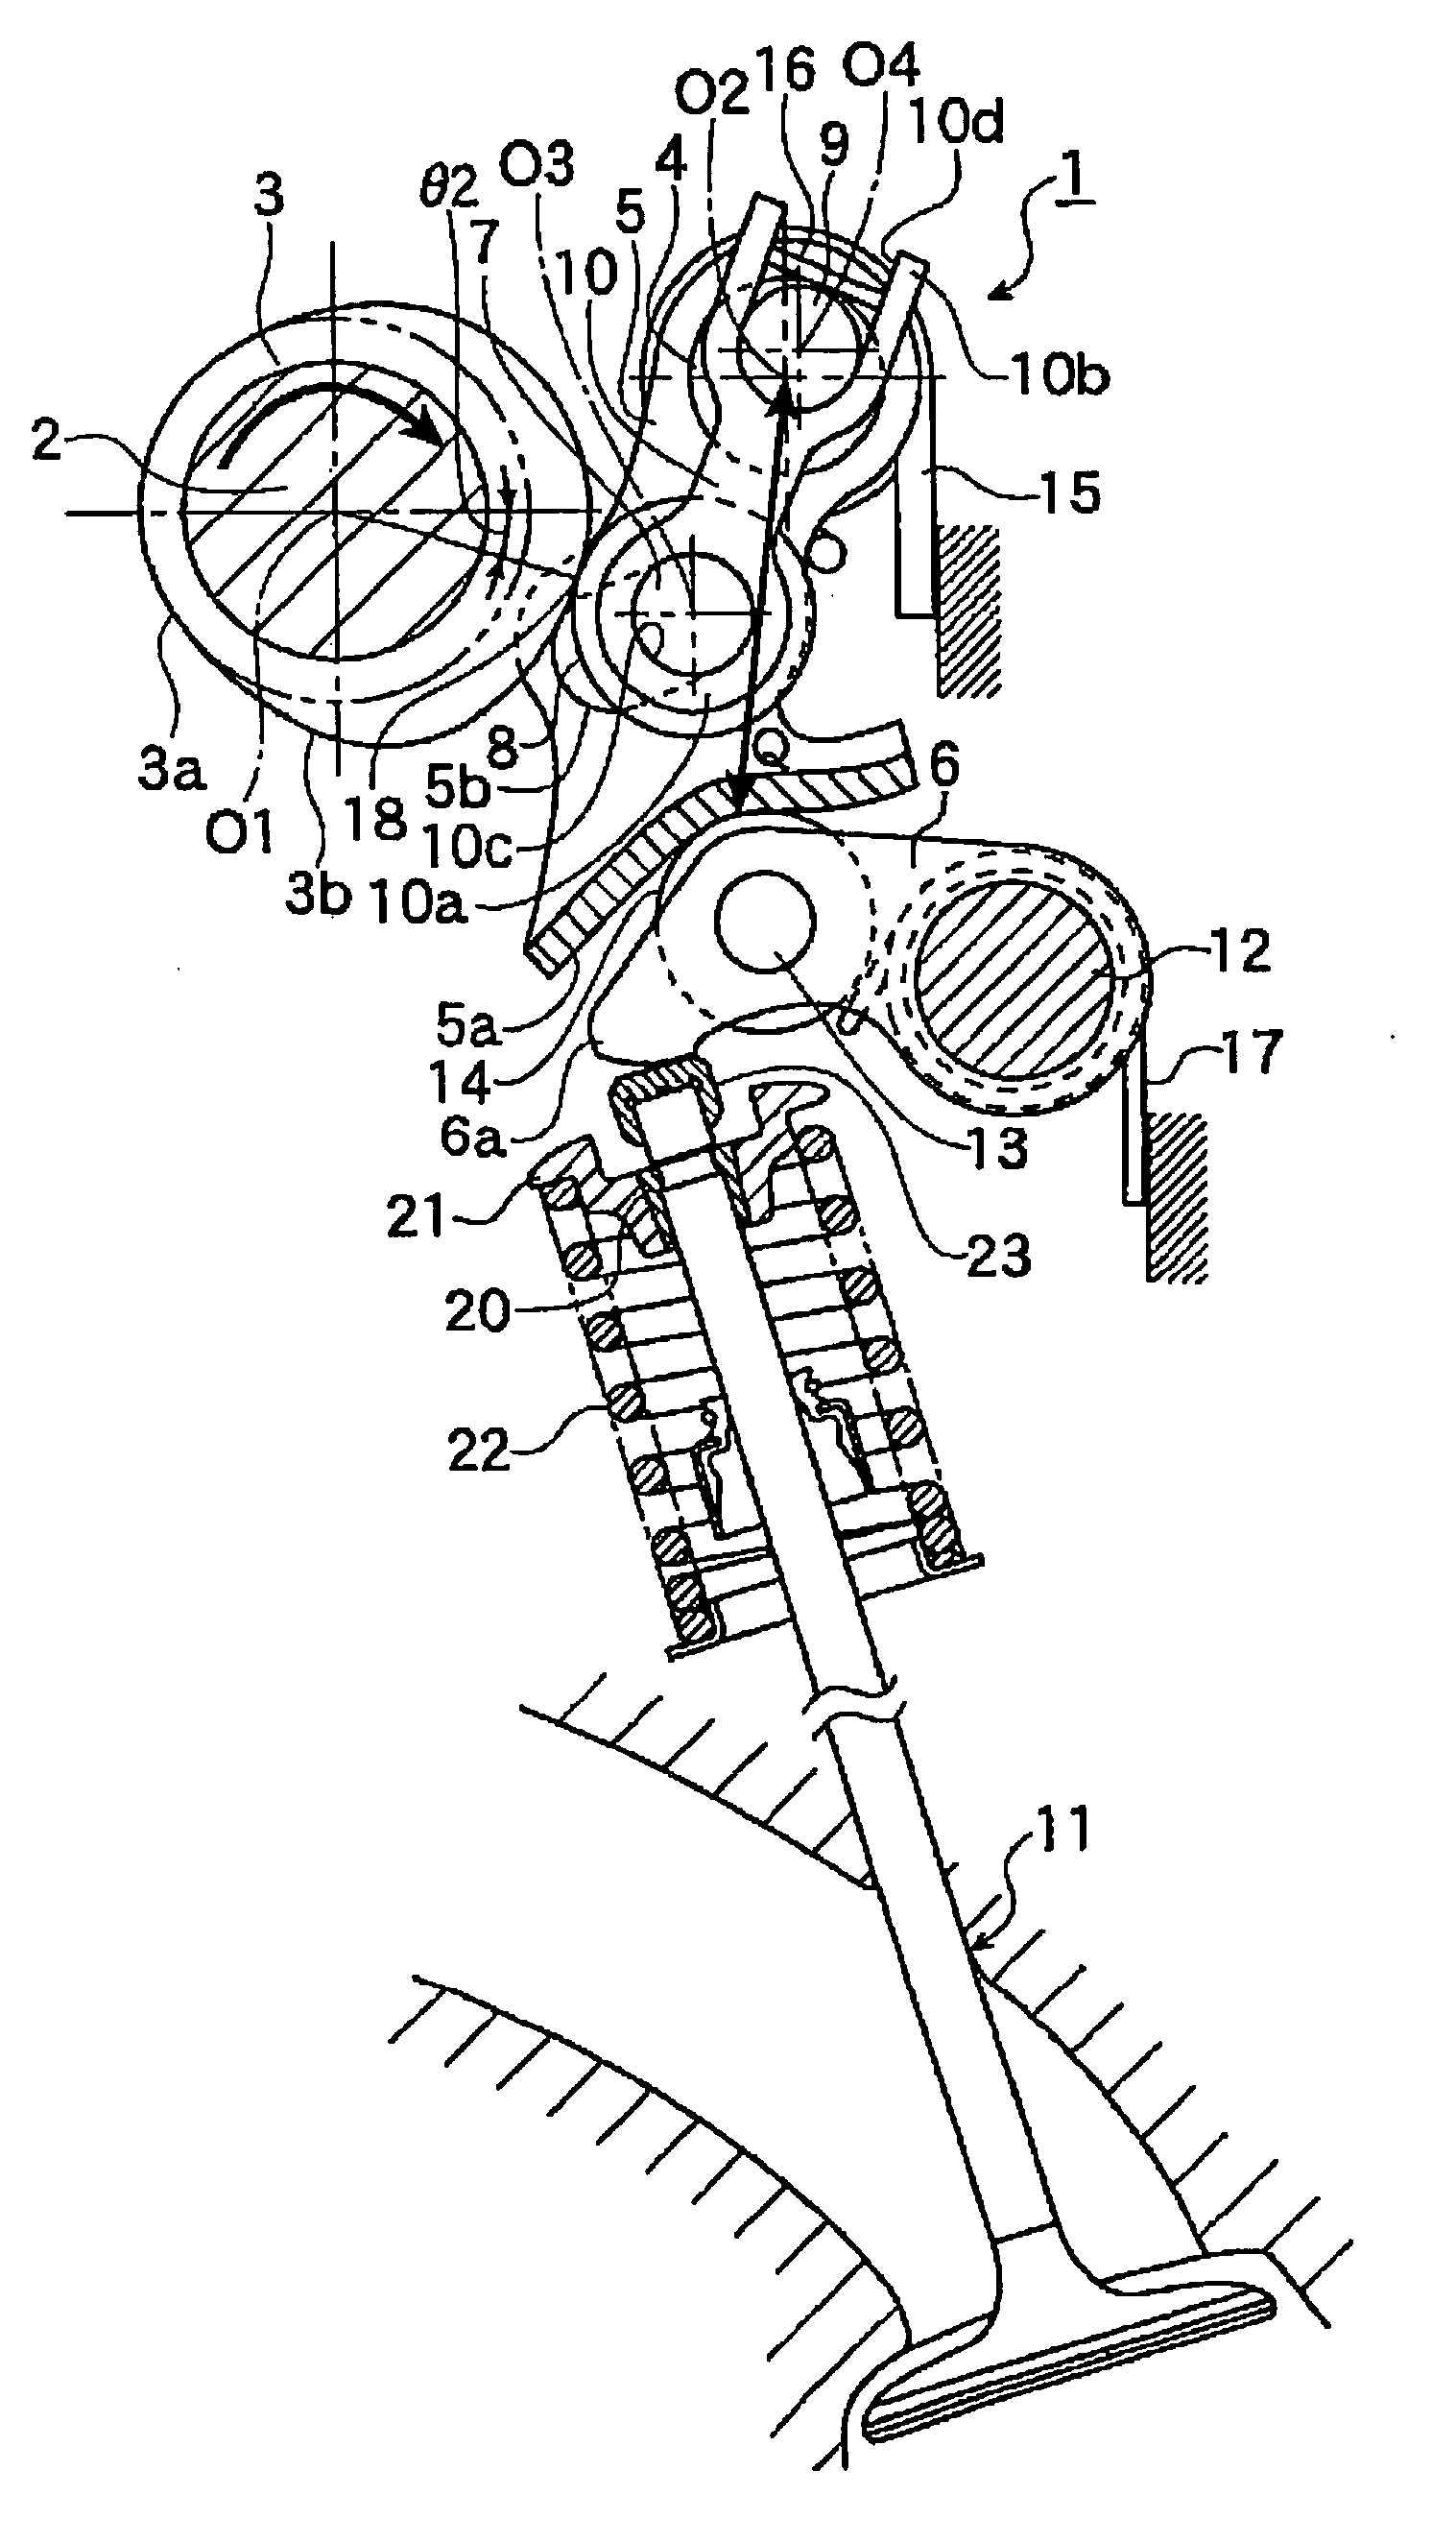 Variable valve train mechanism of internal combustion engine